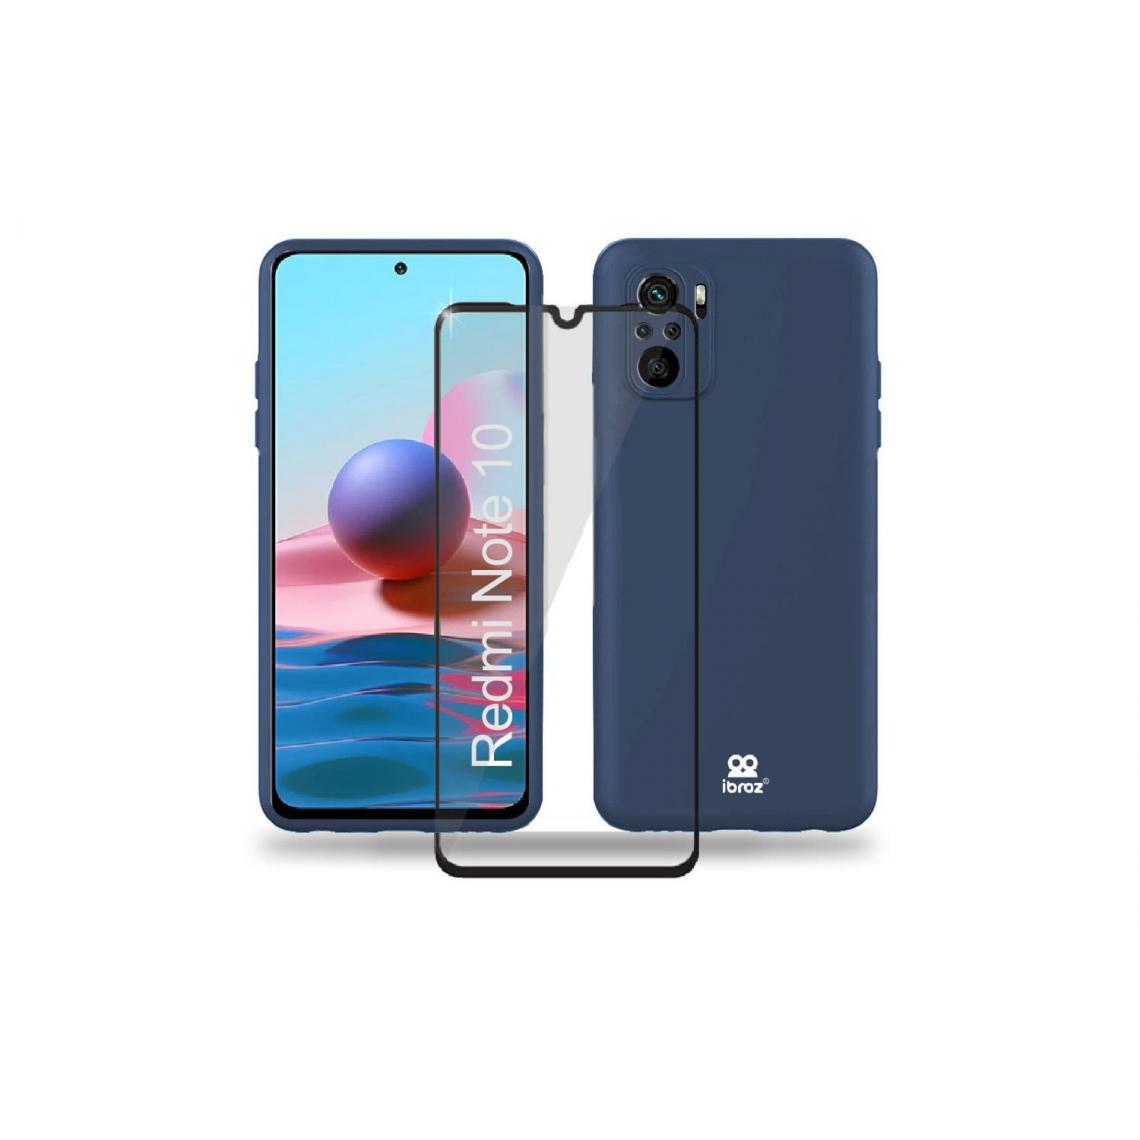 Ibroz - Ibroz Coque silicone bleu + Verre - Autres accessoires smartphone